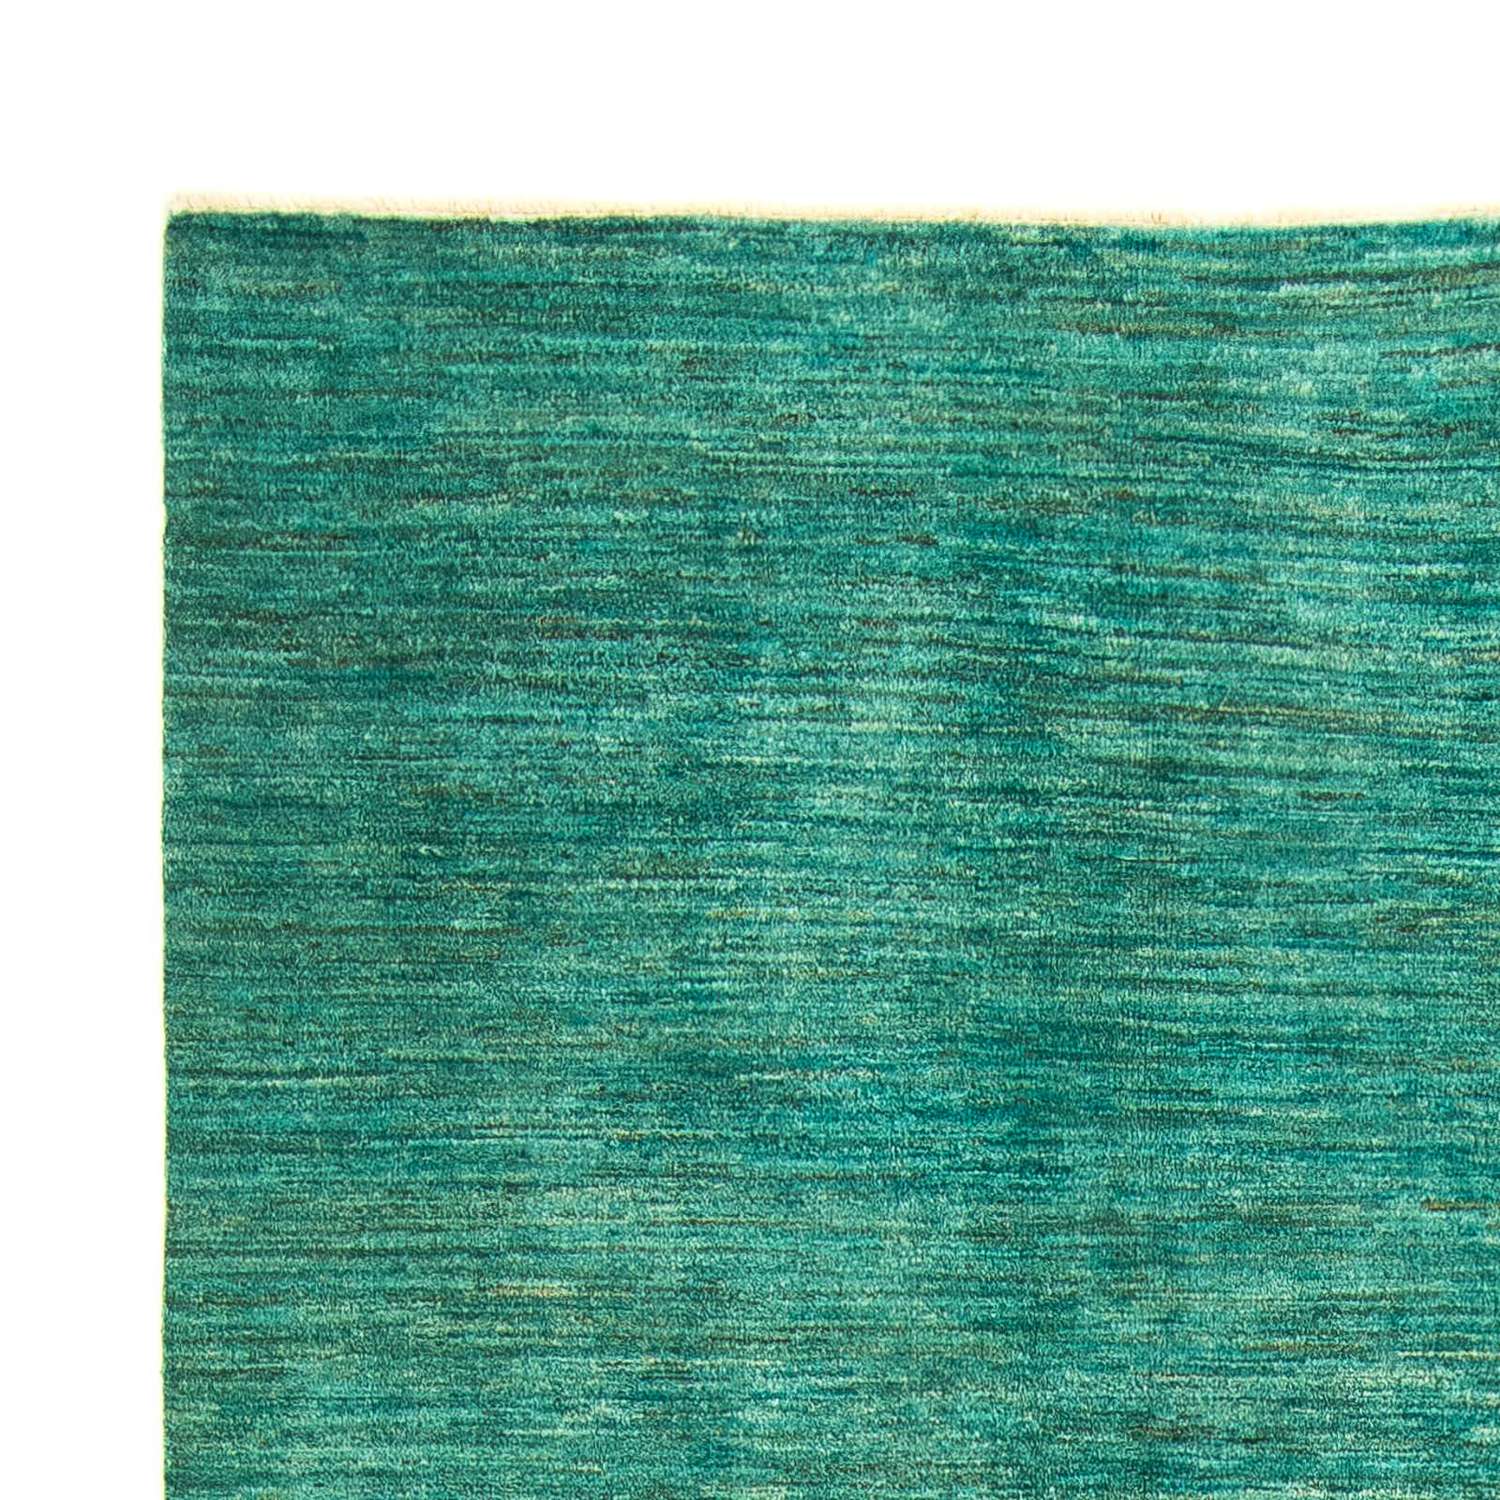 Gabbeh koberec - Indus - 303 x 237 cm - tyrkysová